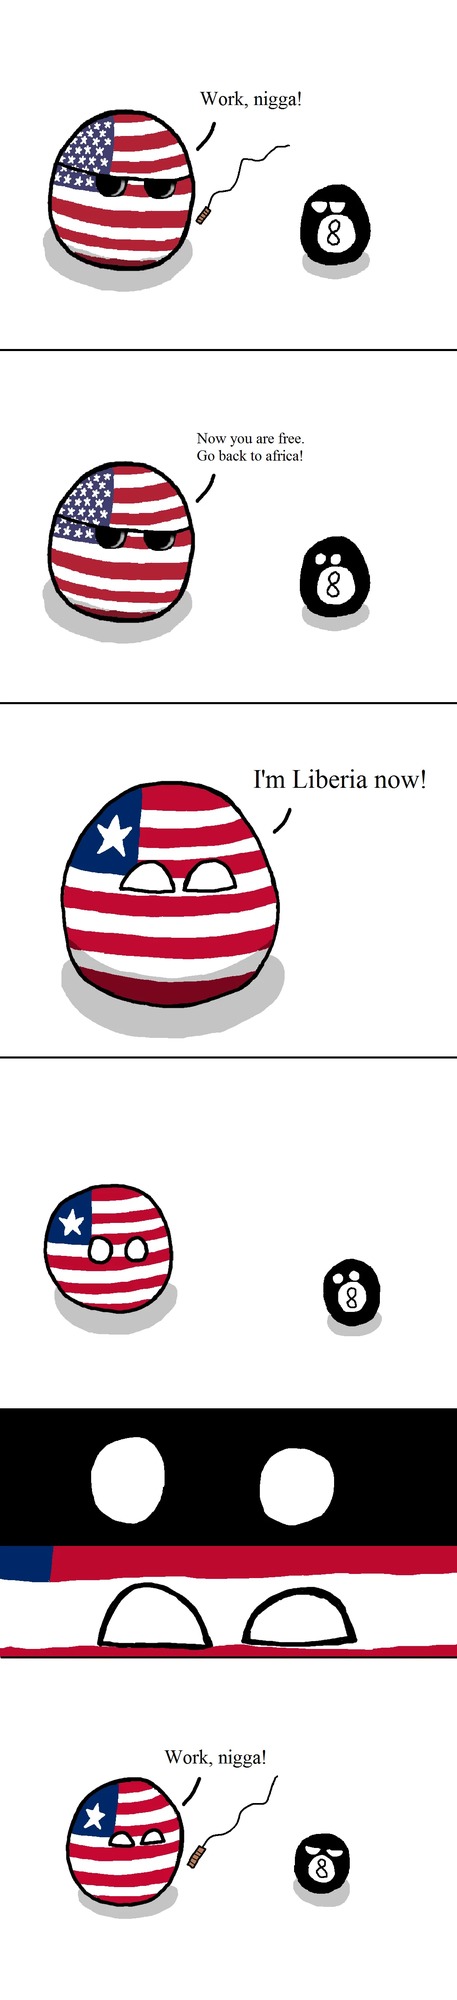 History of Liberia - meme